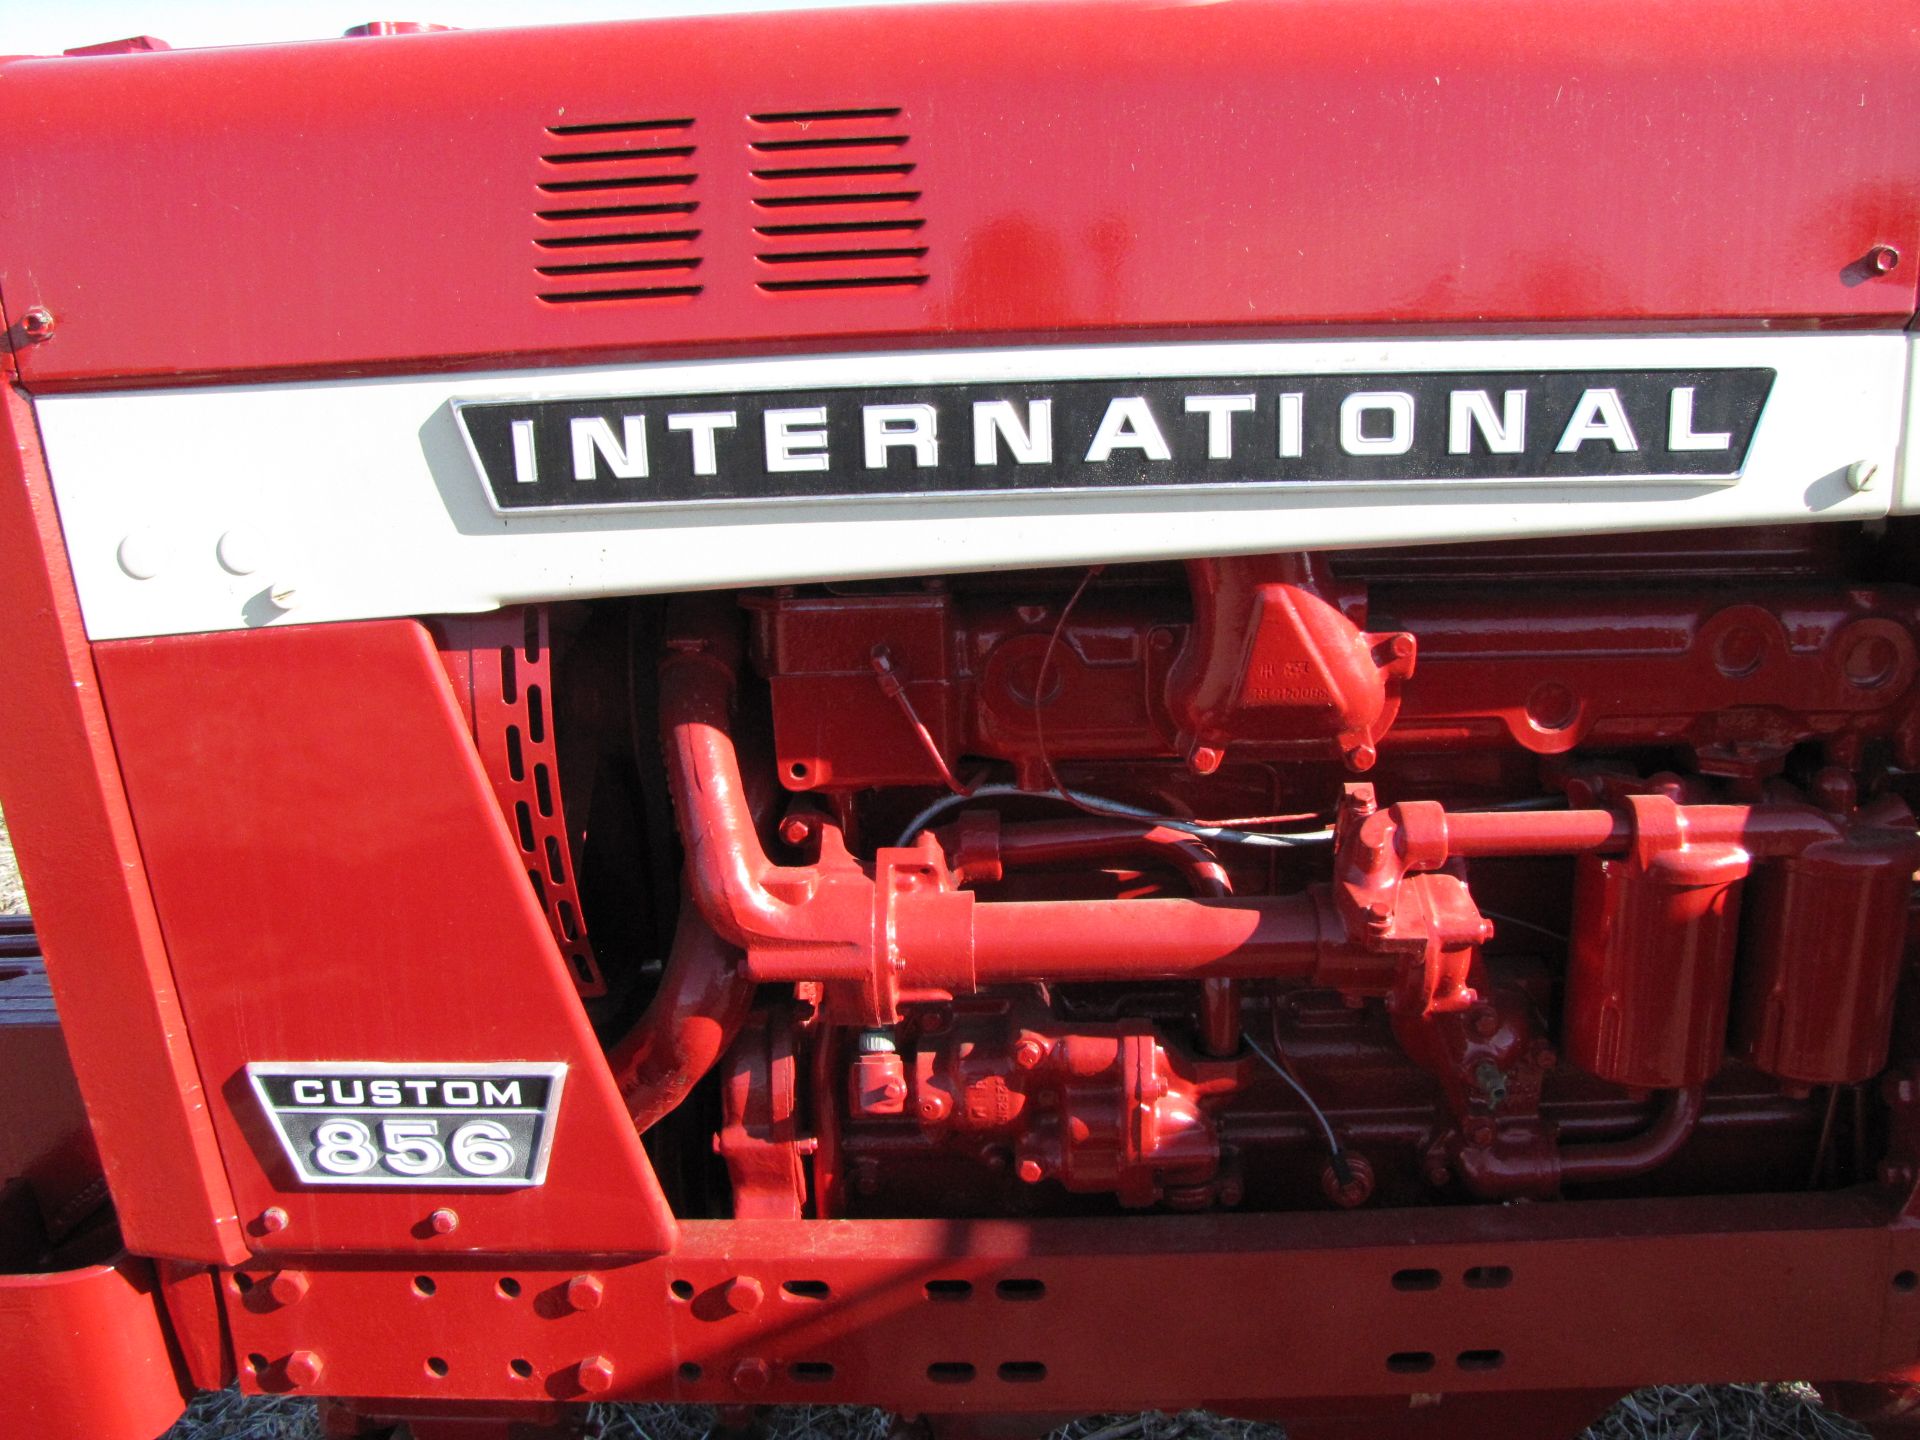 International 856 Custom Tractor - Image 16 of 50